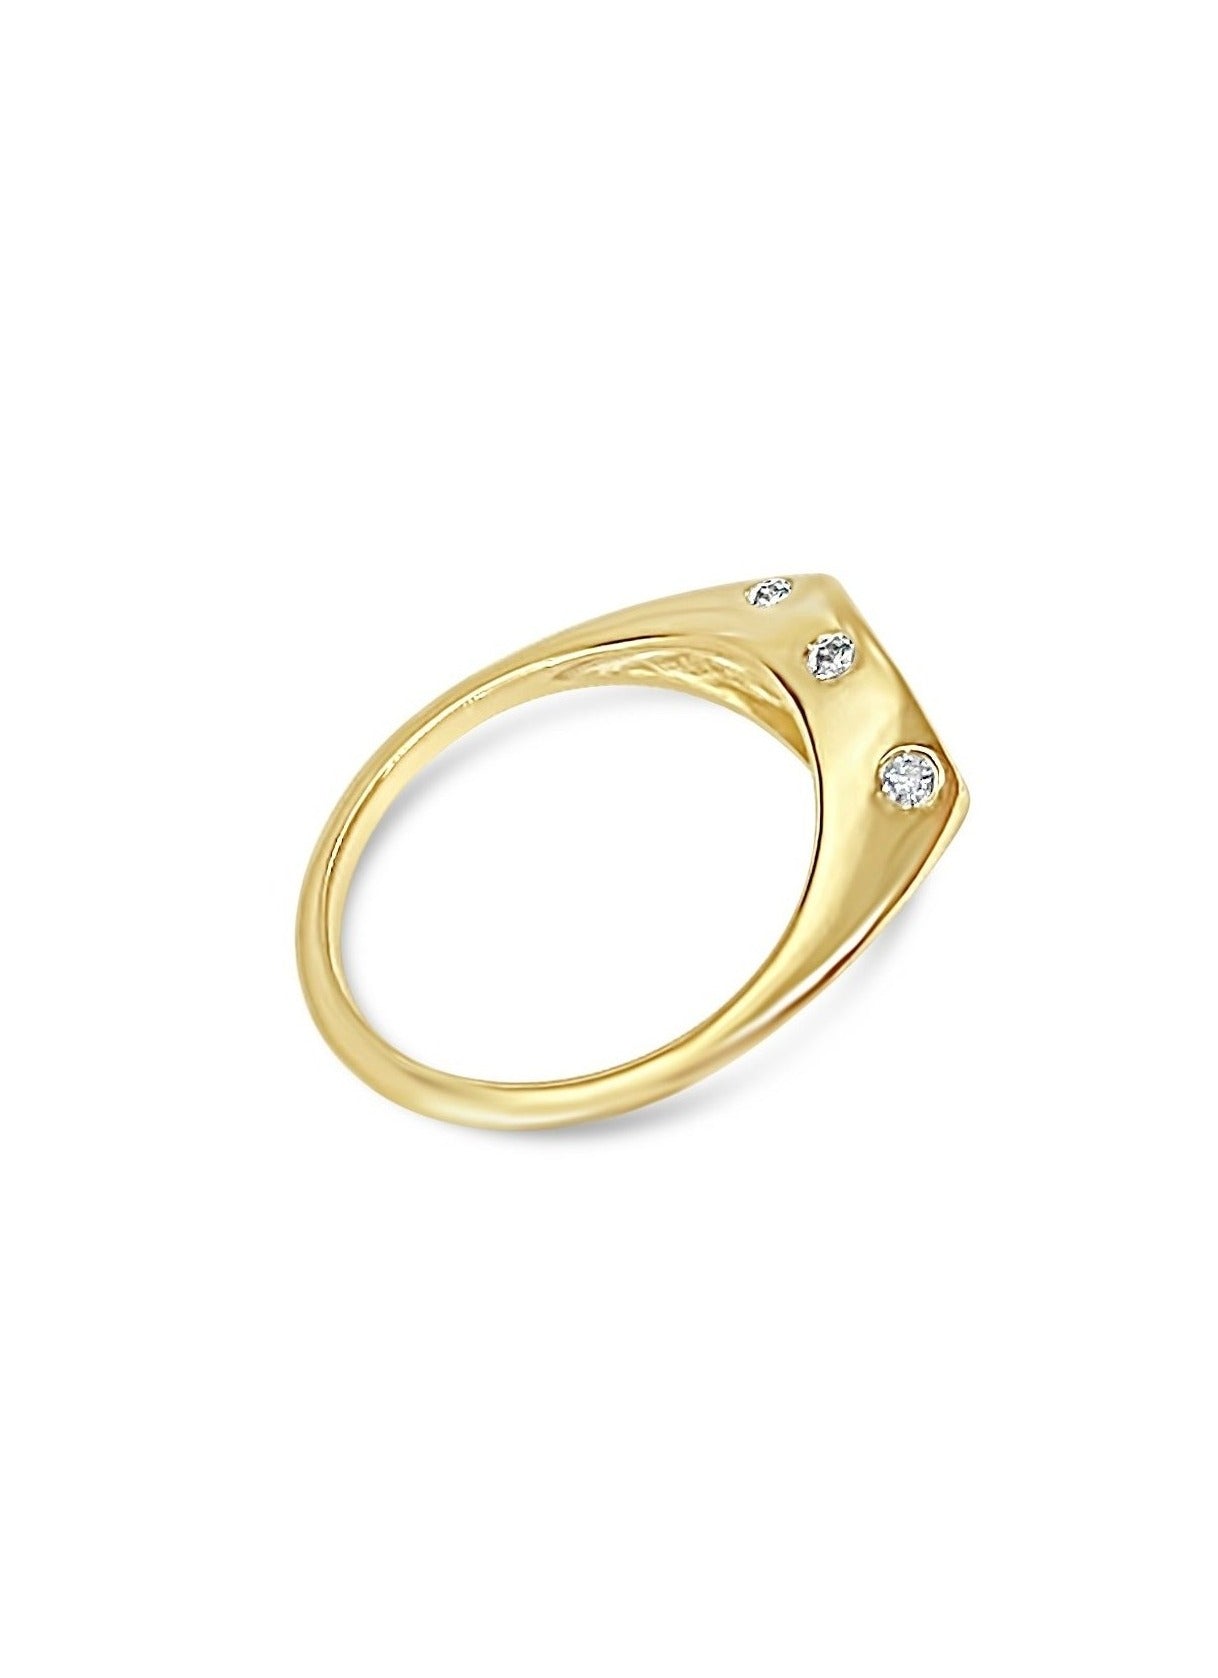 Jacqueline Signet Ring in 14K Solid Gold